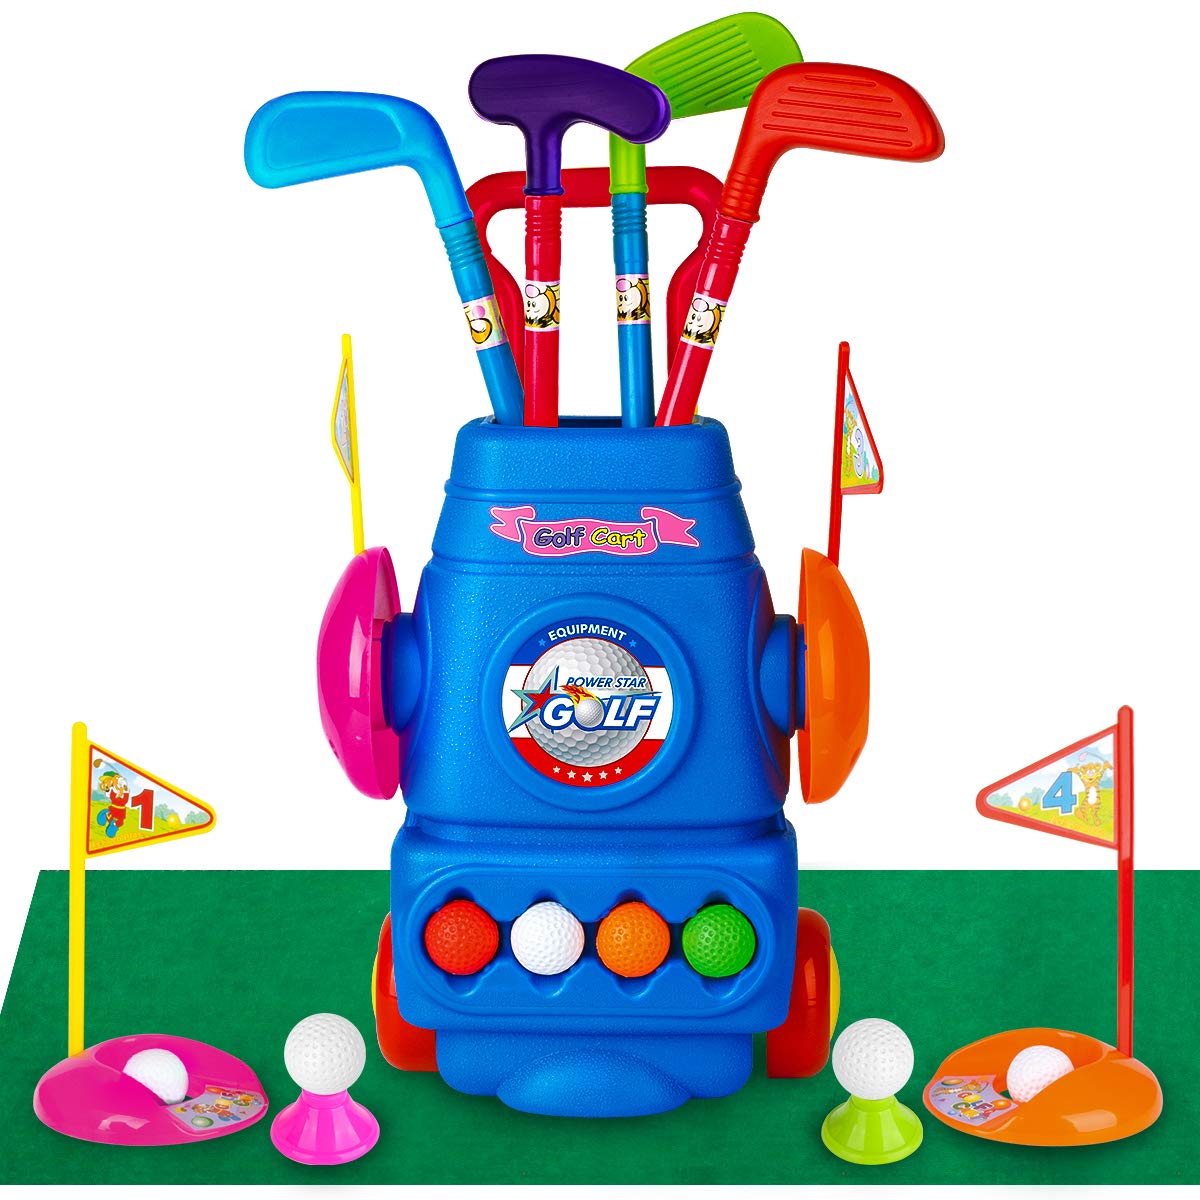 Meland Kids Golf Club Set - Toddler Golf Ball Game Play Set Sports Toys Gift for Boys Girls 3 4 5 6 Year Old